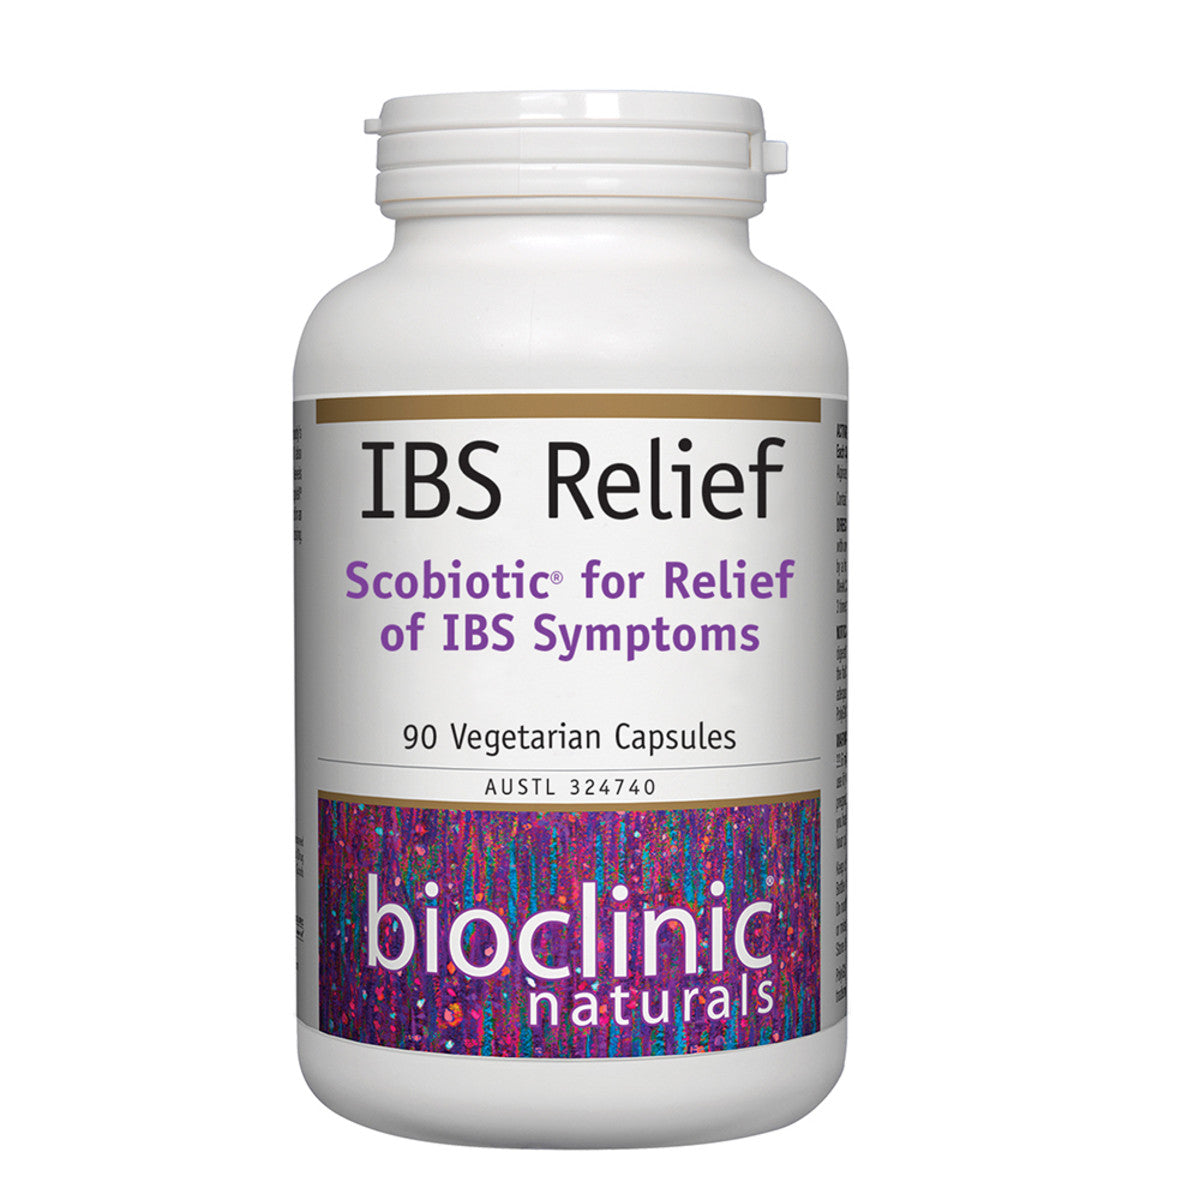 Bioclinic Naturals - IBS Relief